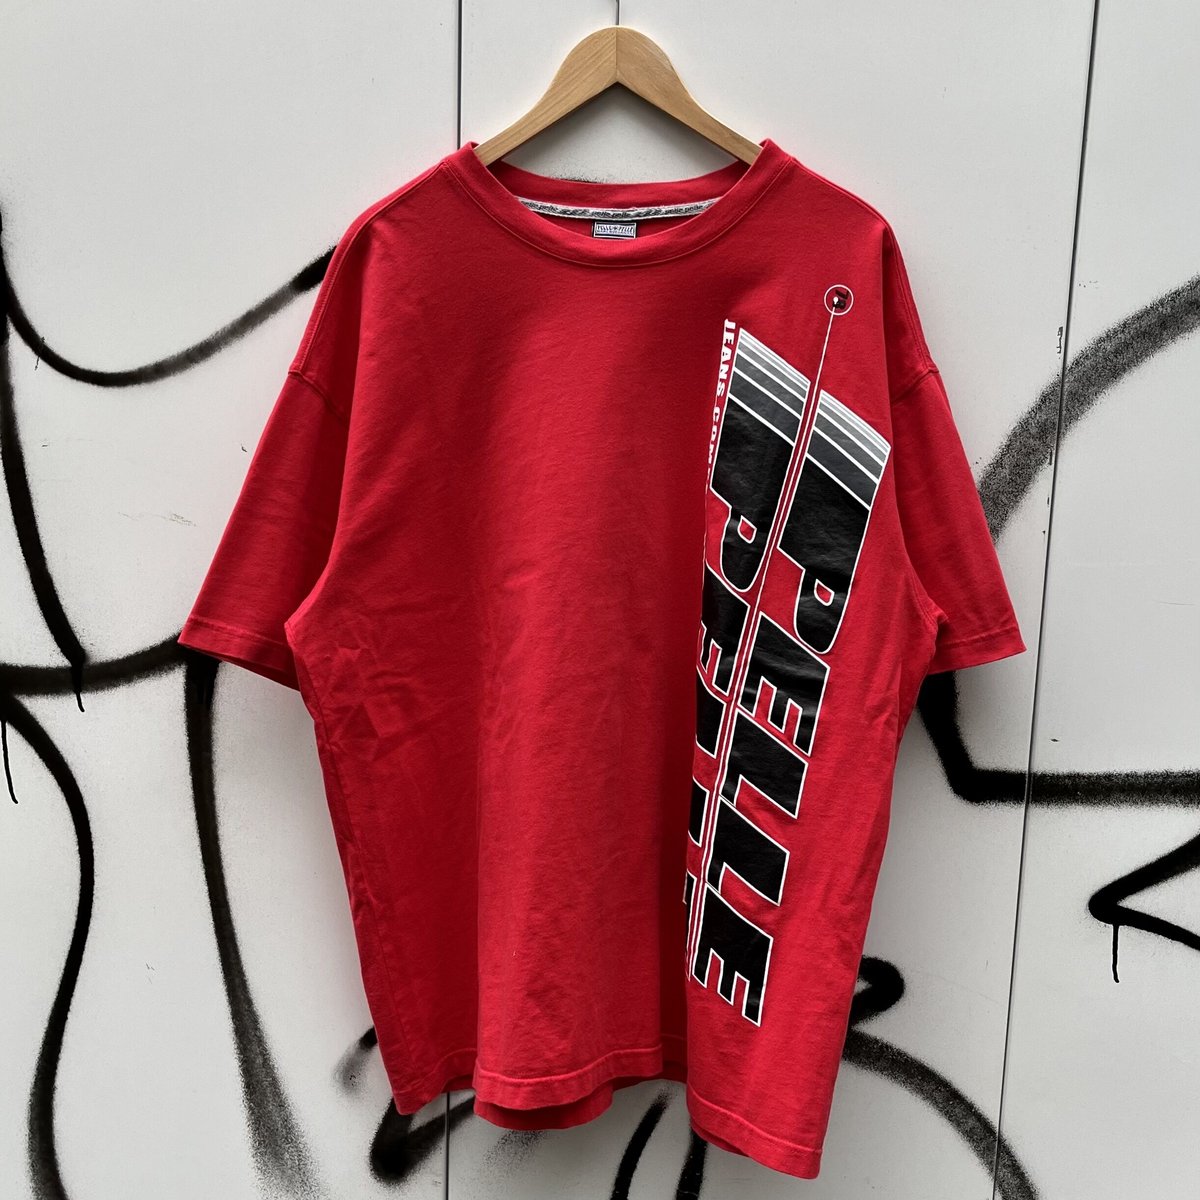 Pelle Pelle/ペレペレ ビッグロゴTシャツ 90年代 (USED)